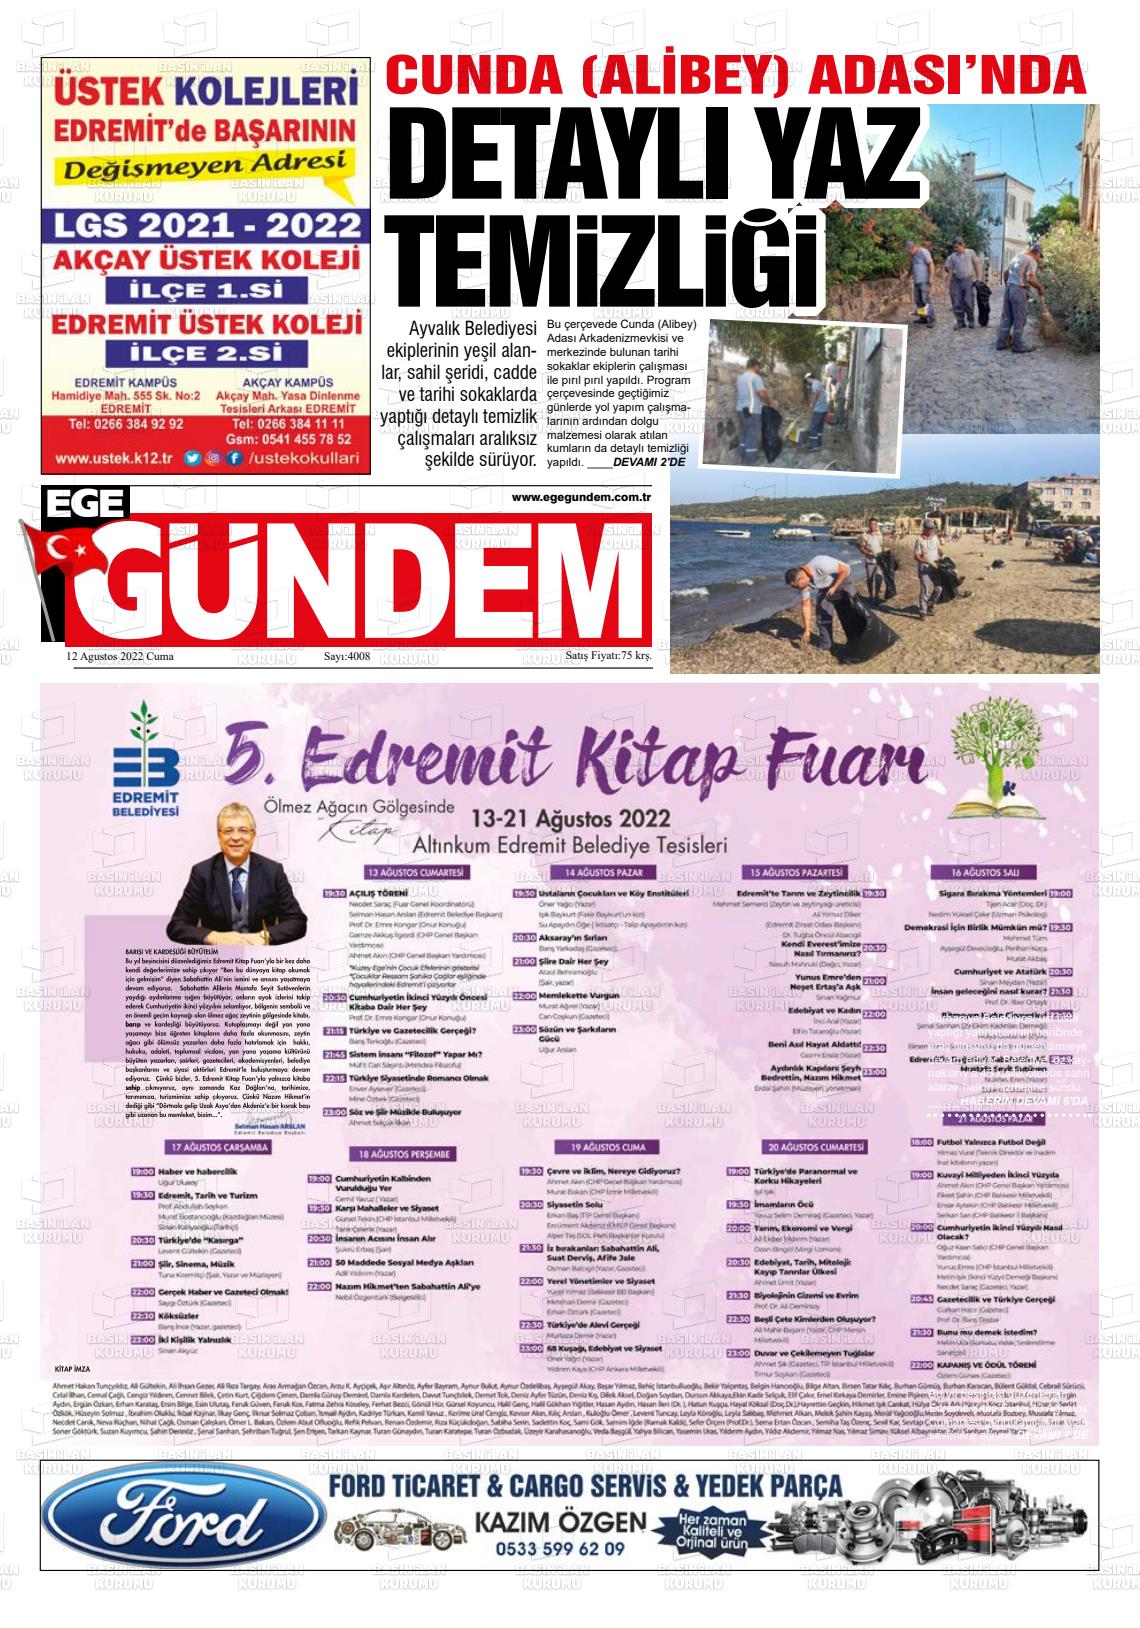 12 Ağustos 2022 Ege Gündem Gazete Manşeti